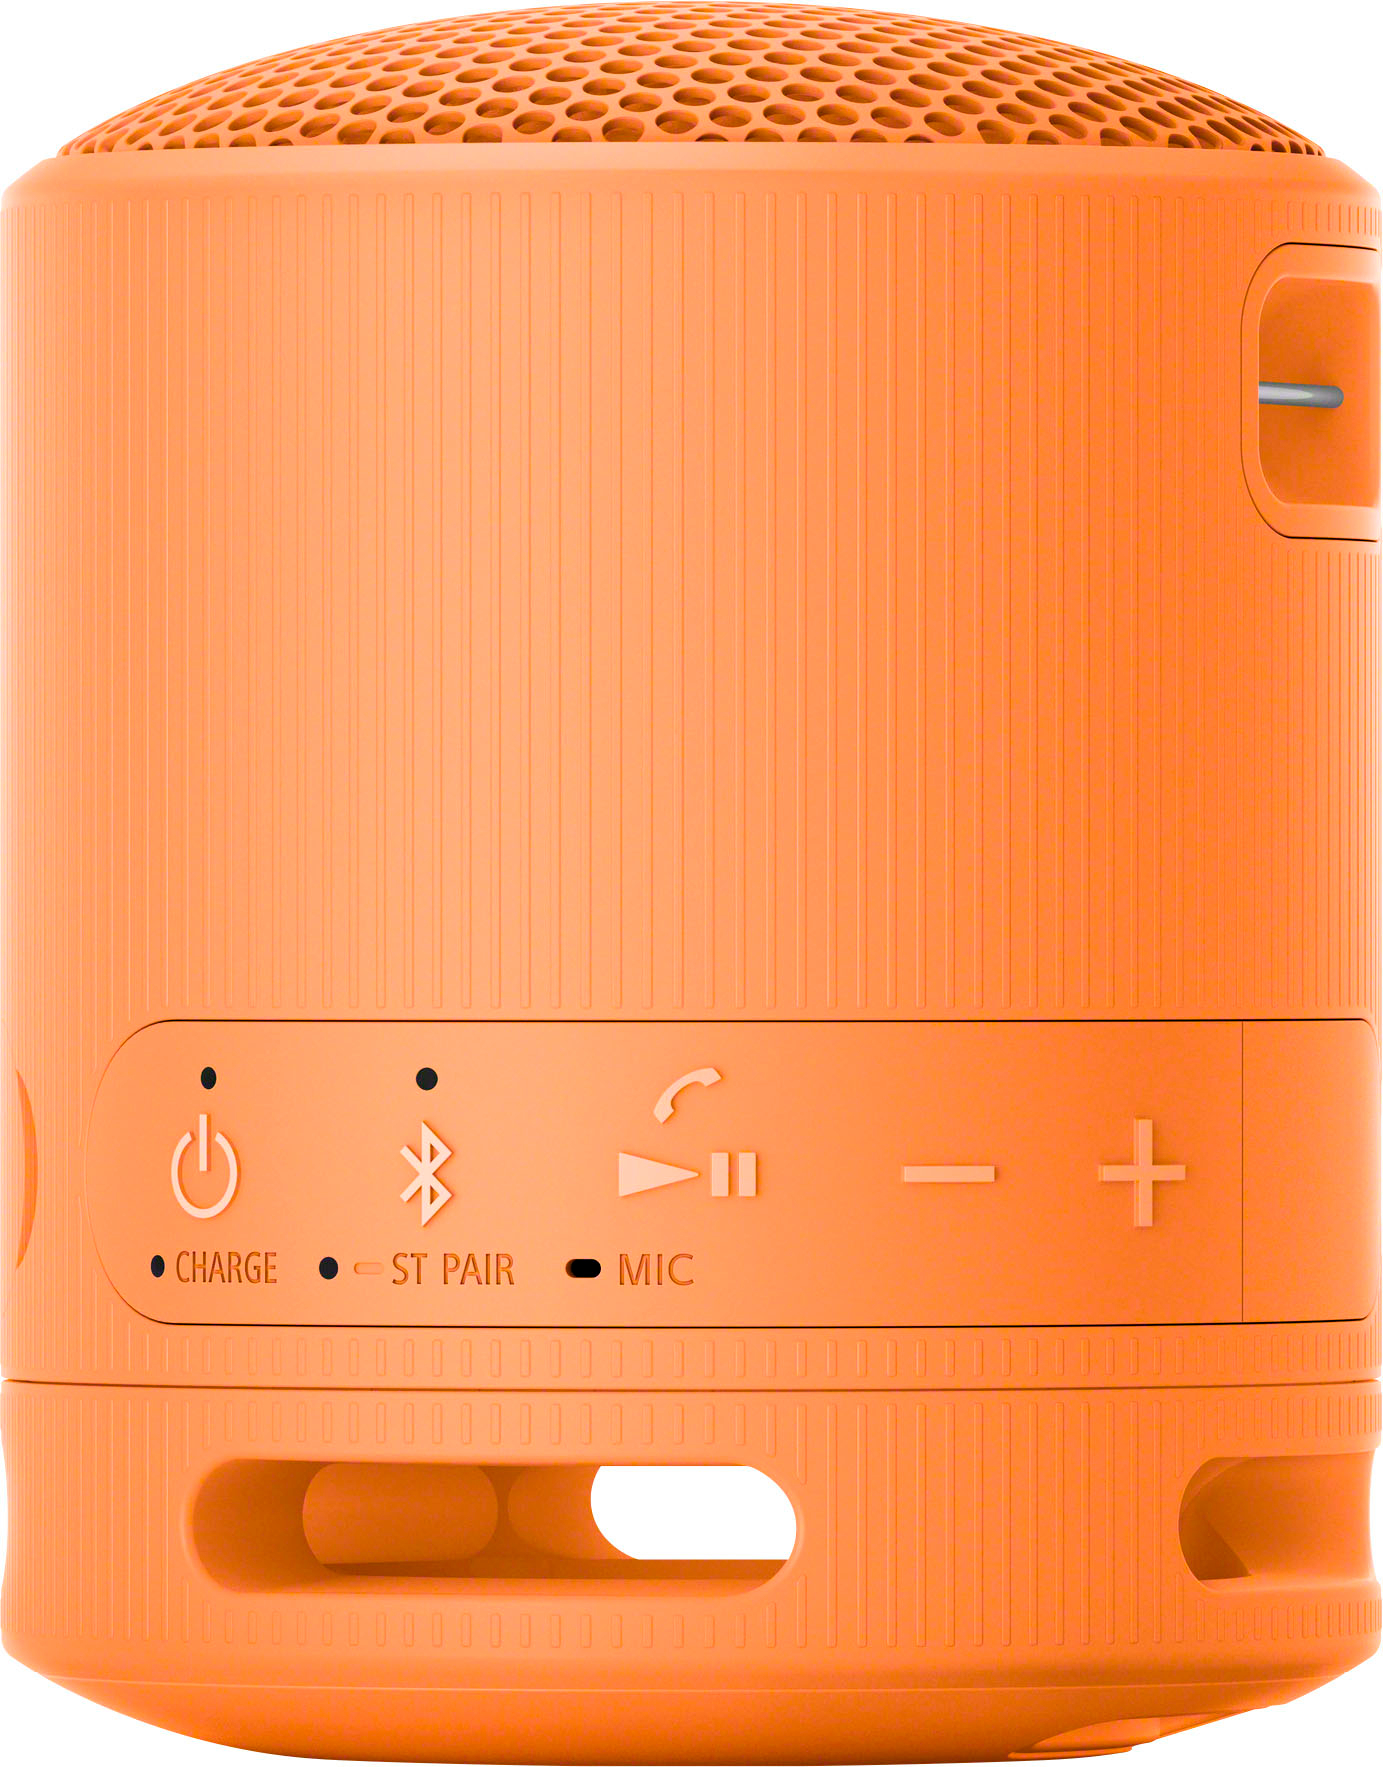 Sony XB100 Compact Bluetooth Speaker - Best SRSXB100/D Orange Buy